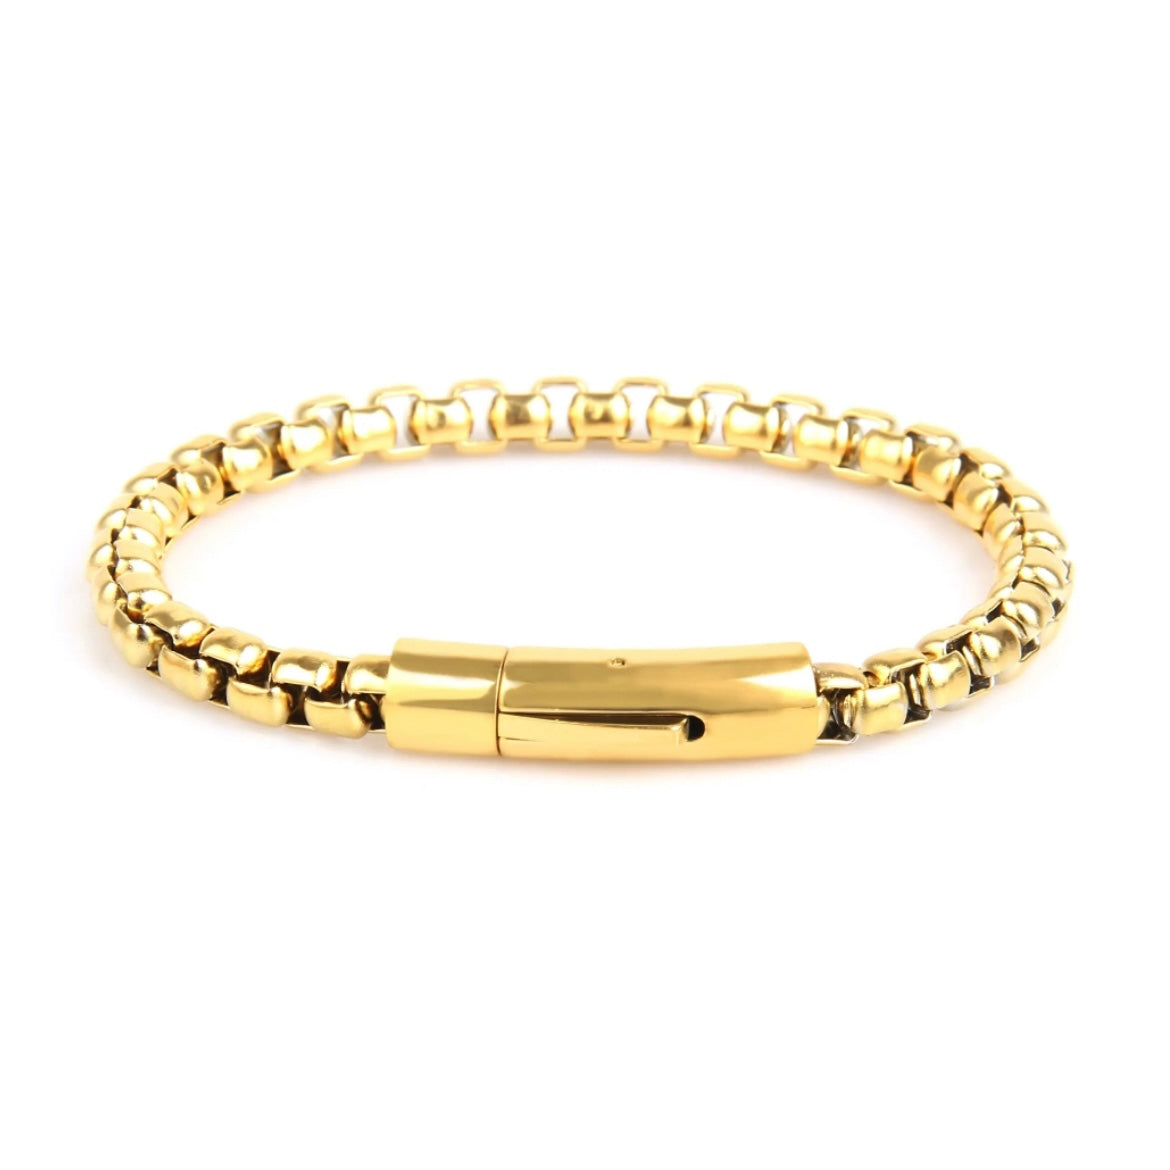 Gold Box Chain Bracelet - My Harmony Tree